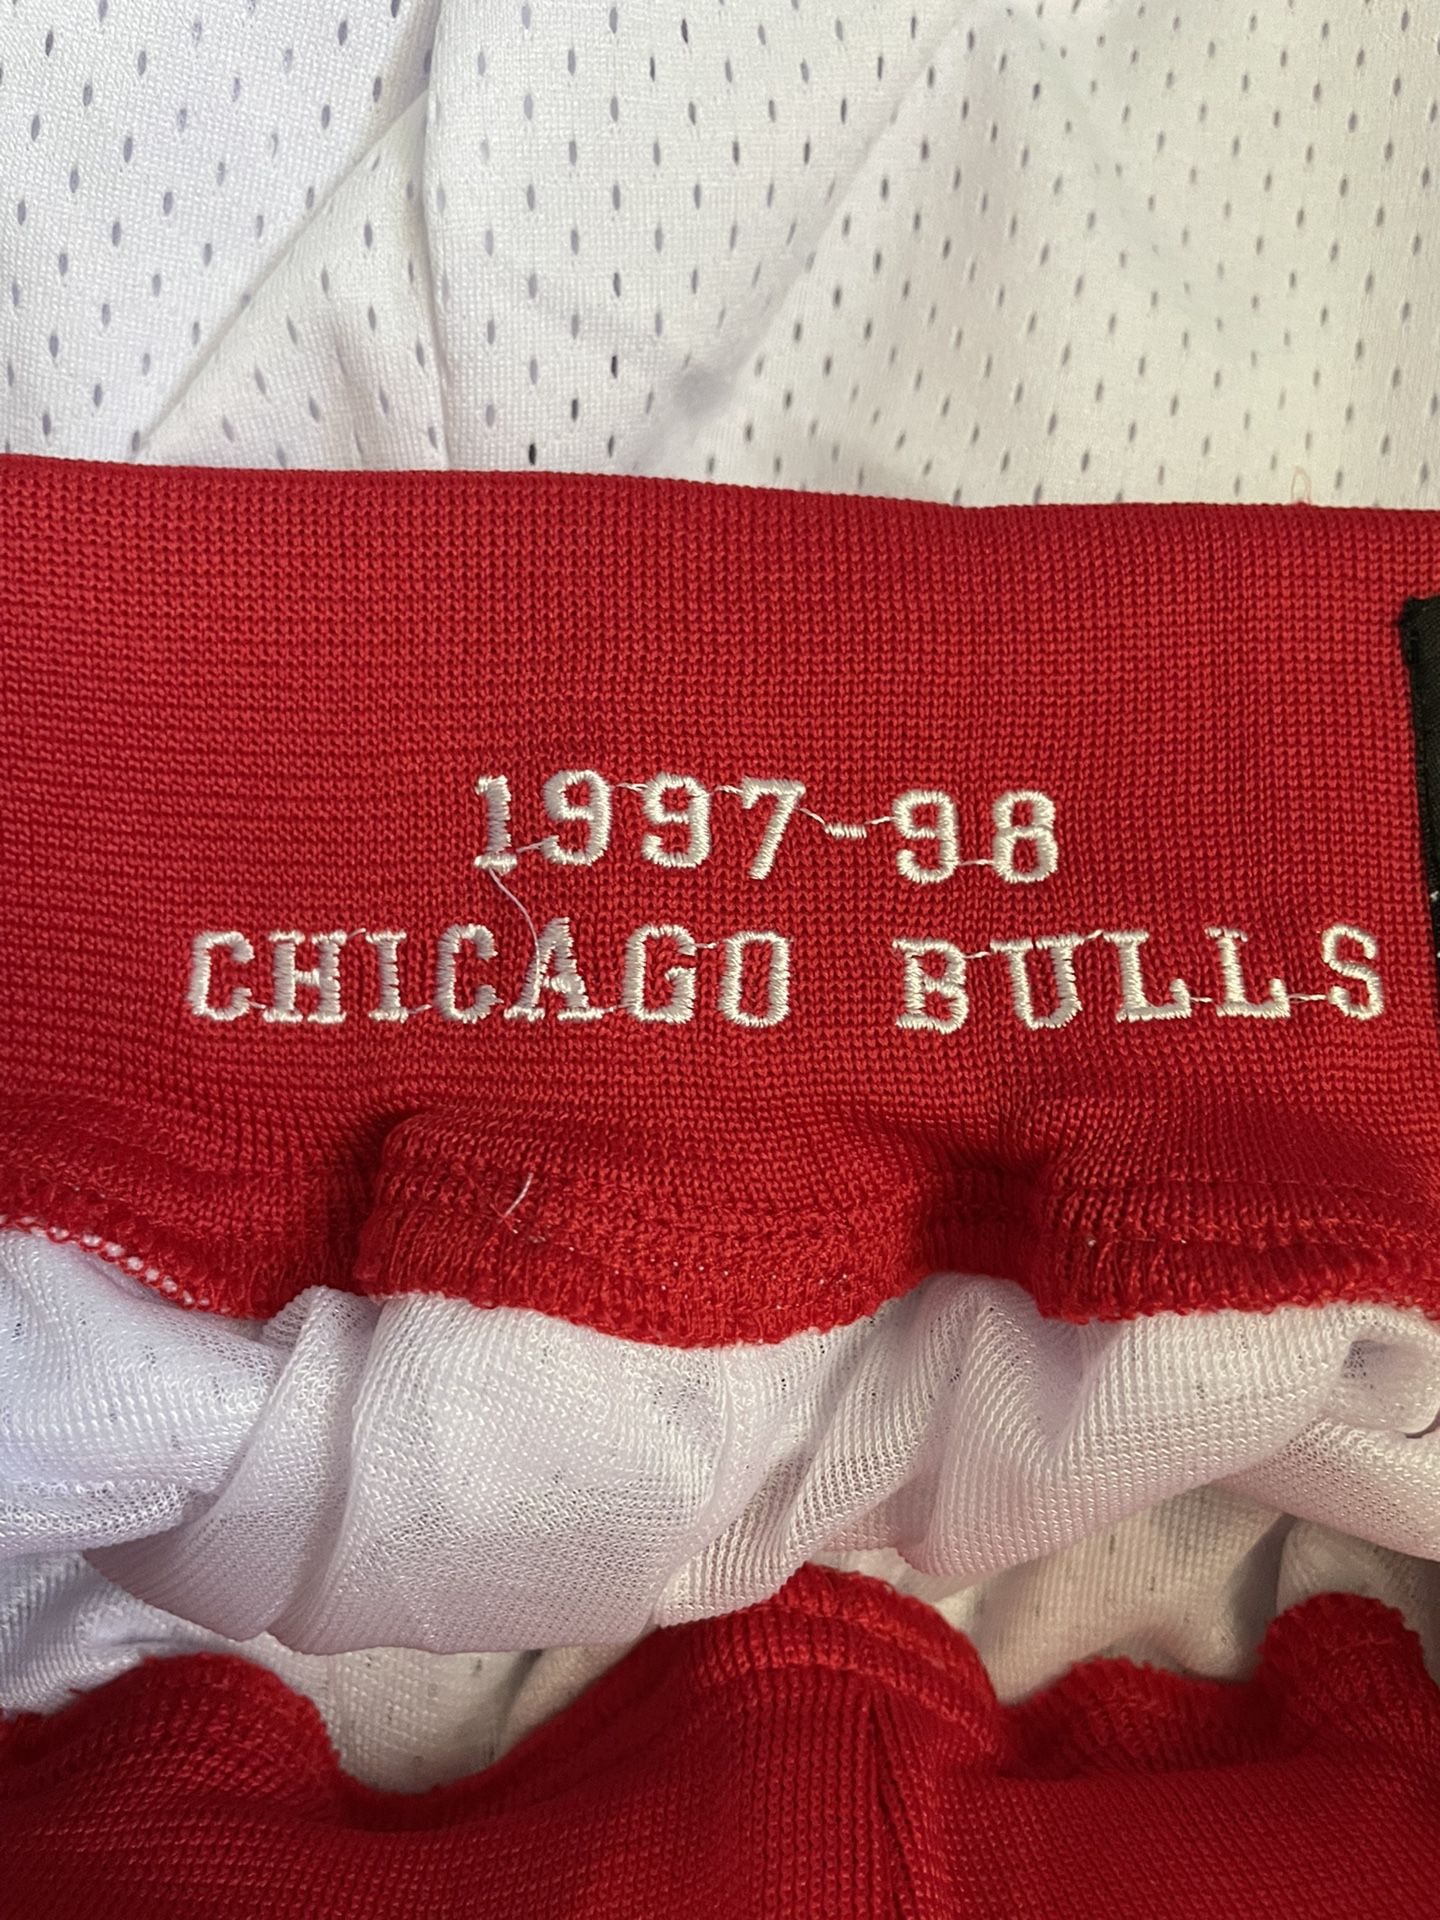 JUST DON】Men's New Original NBA Chicago Bulls Shorts Red